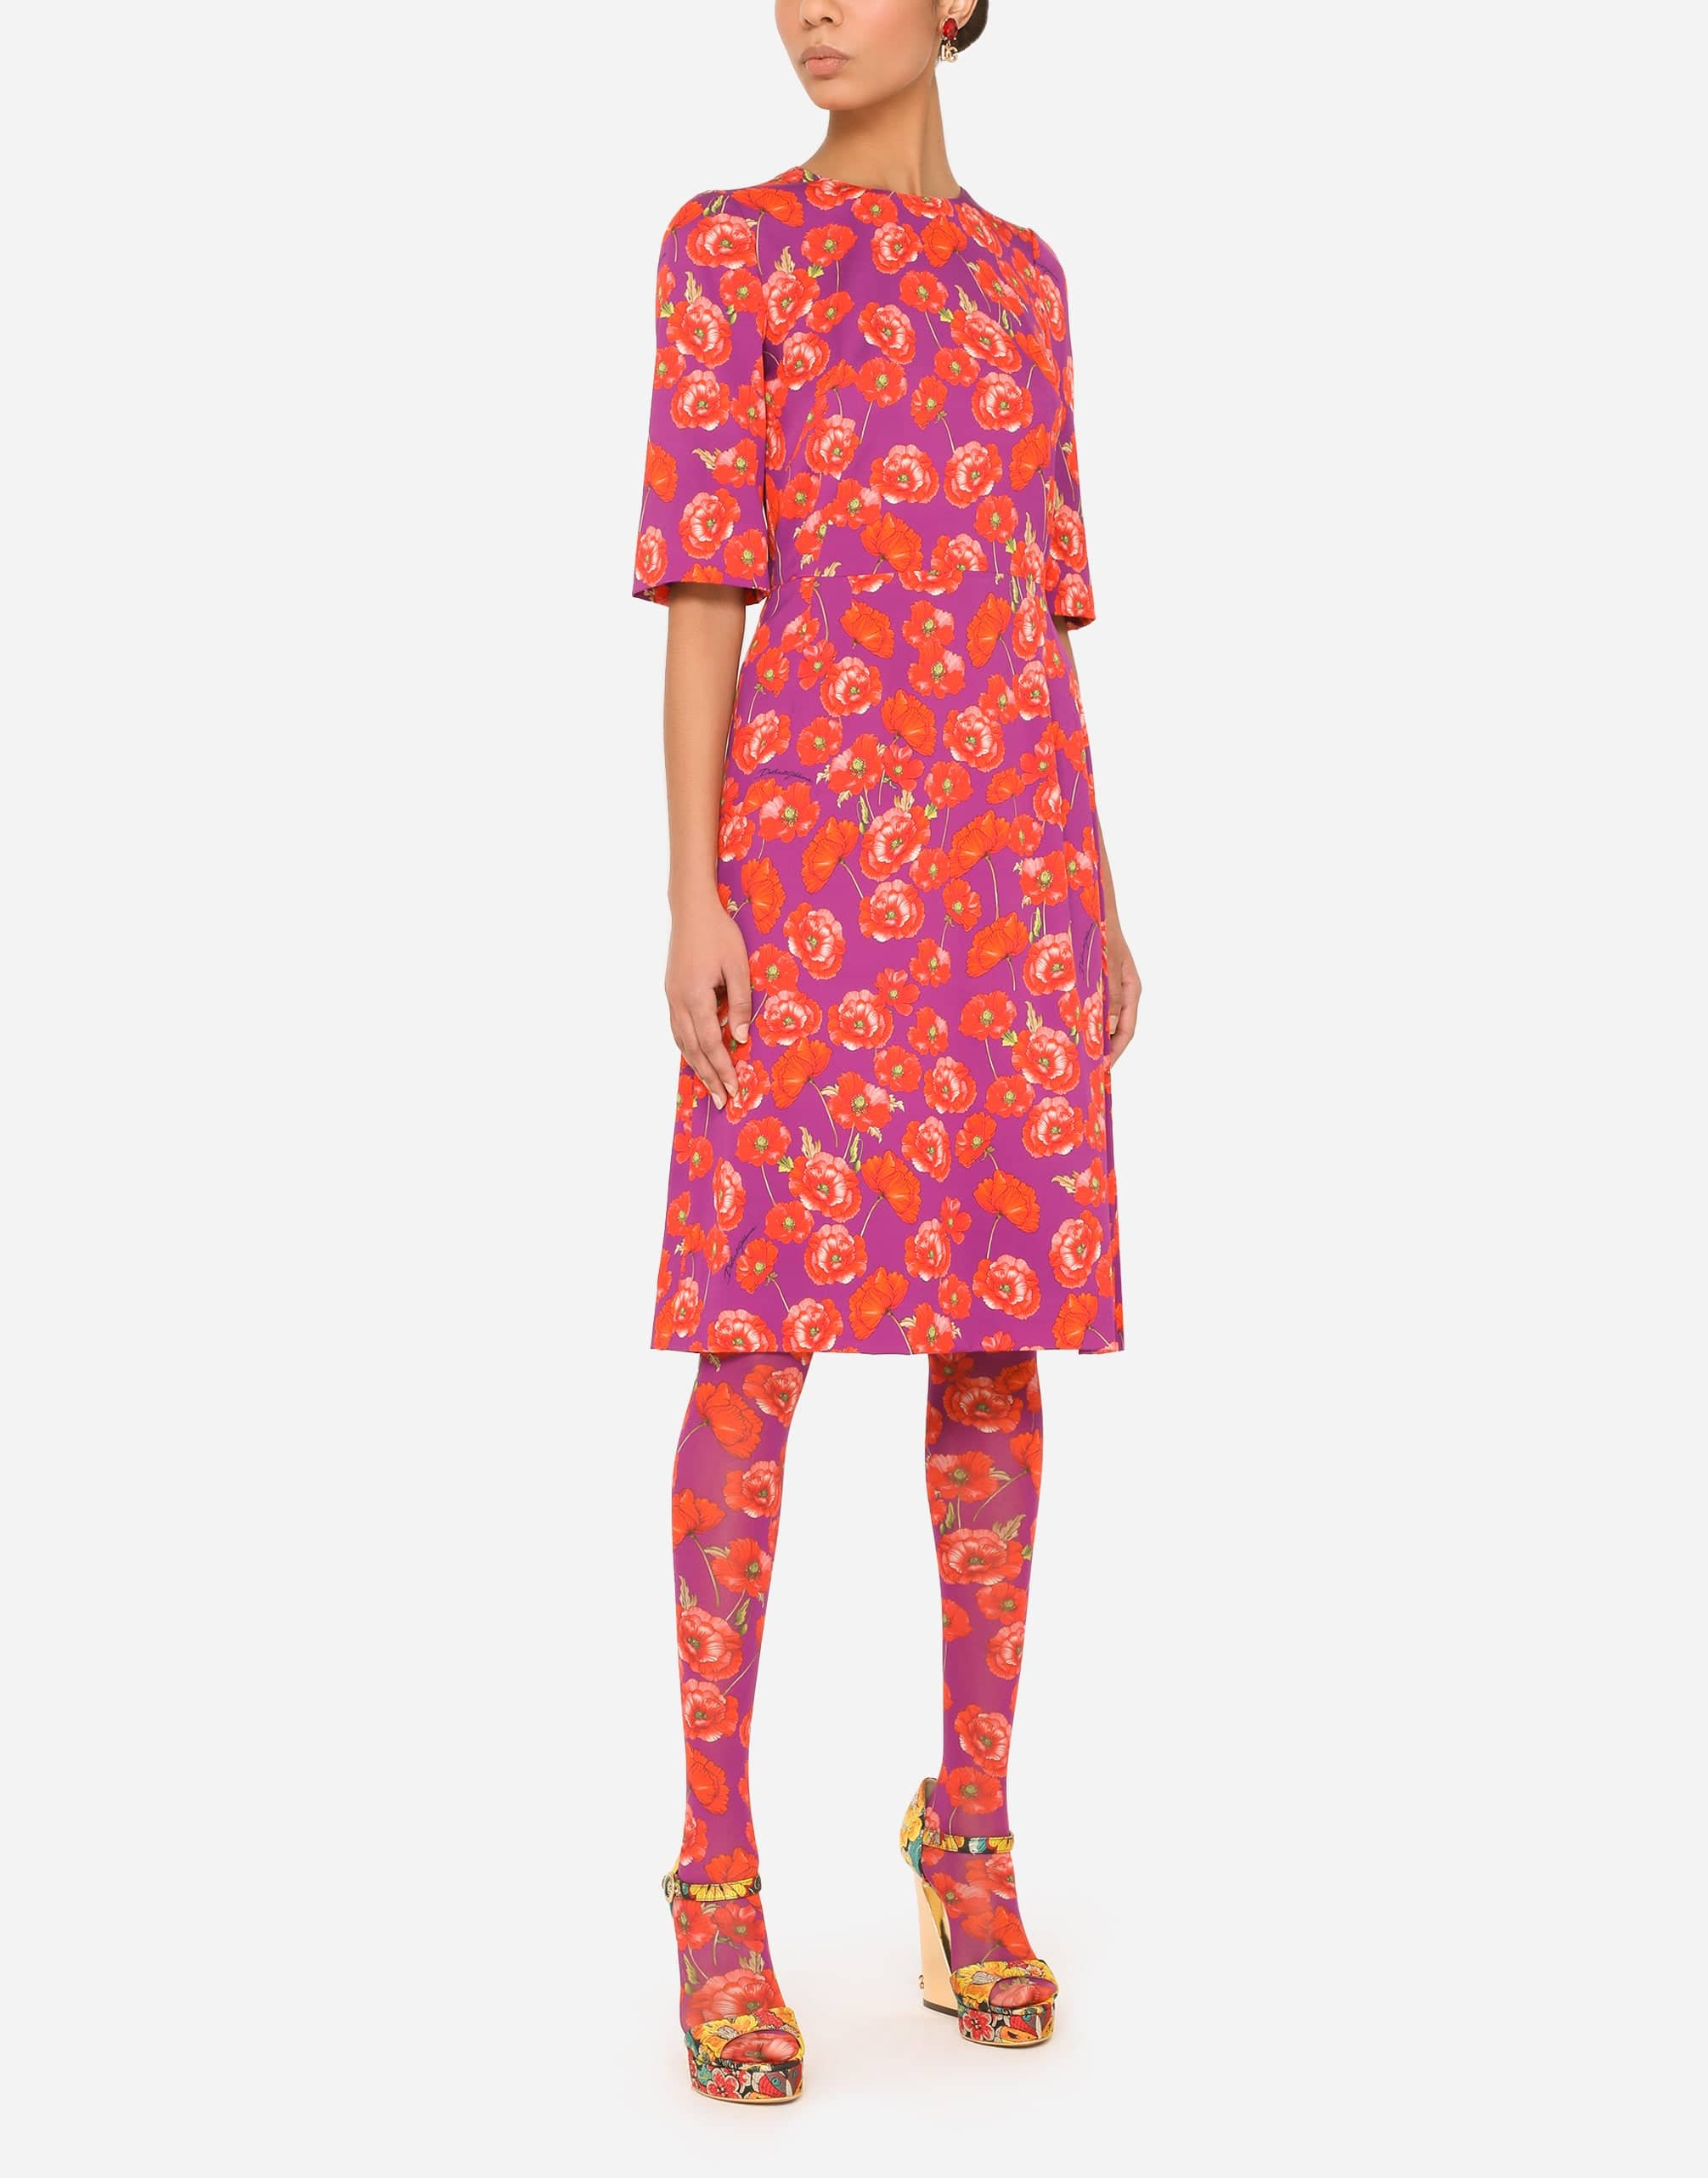 Dolce & Gabbana Poppy-Print Three-Quarter Sleeve Dress